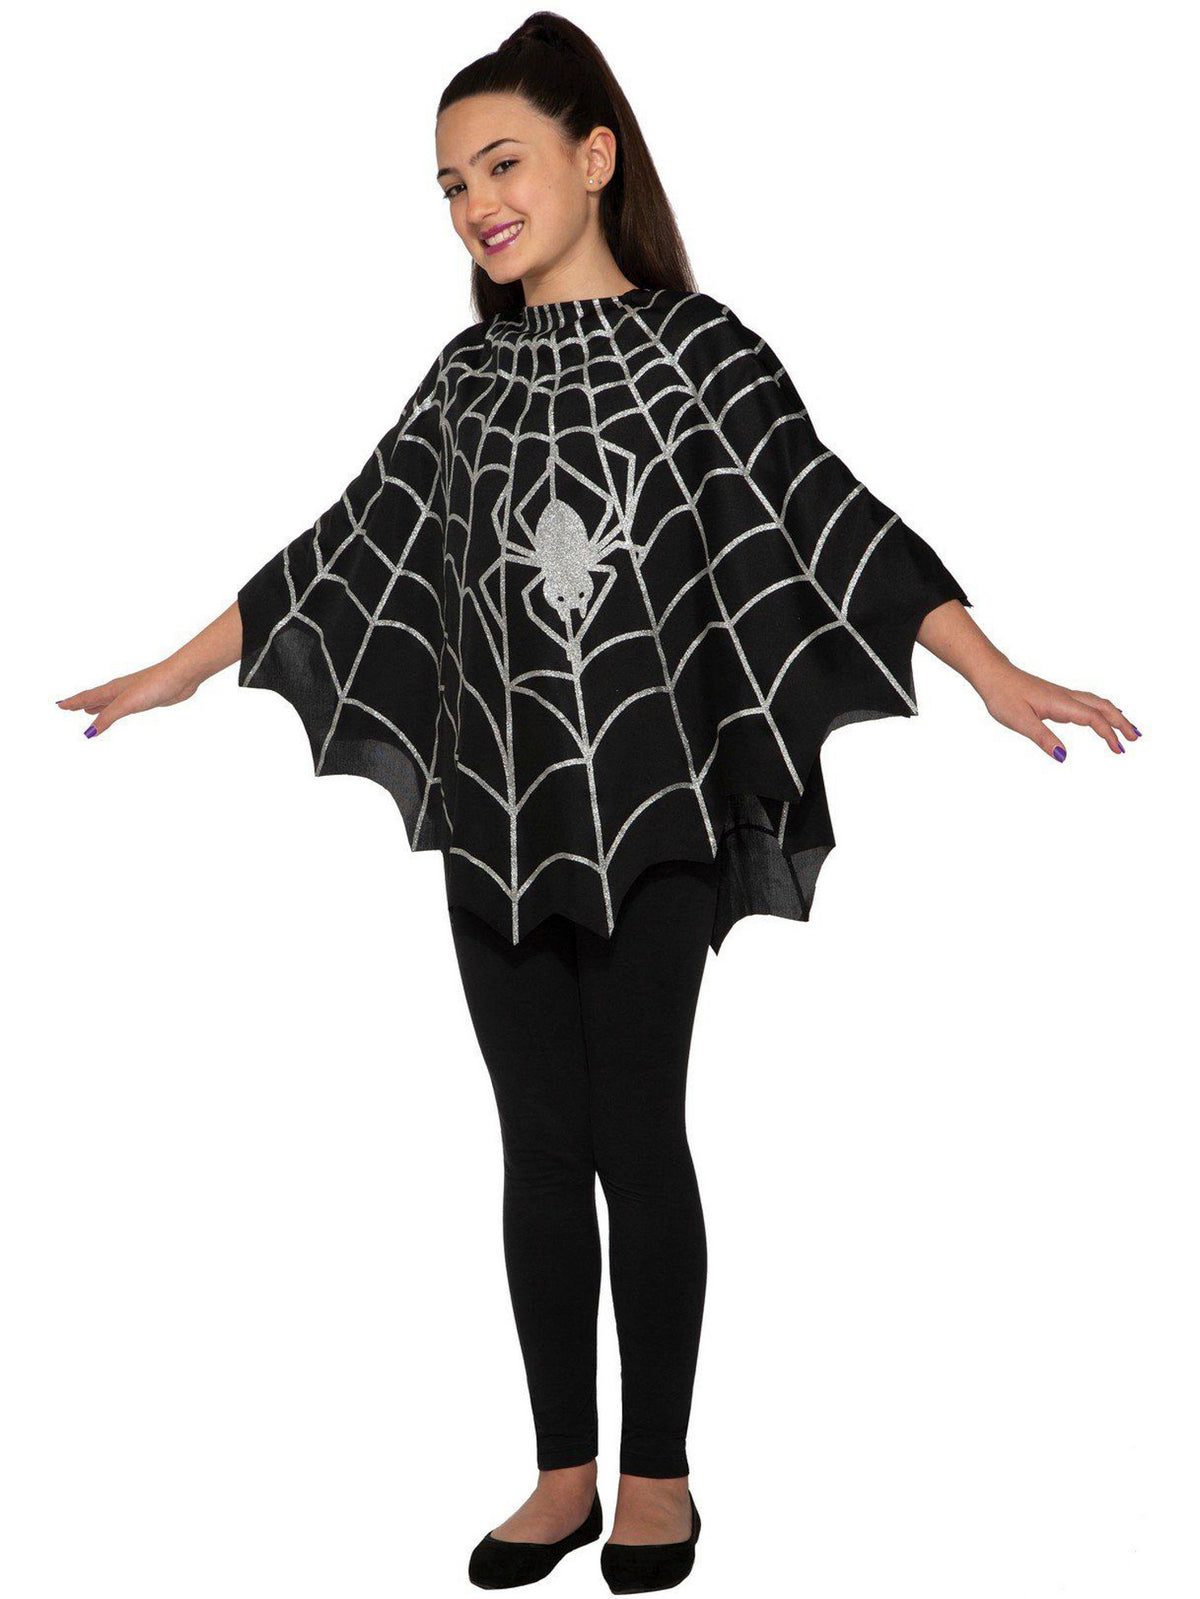 Kid's Spider Poncho Costume — Costume Super Center